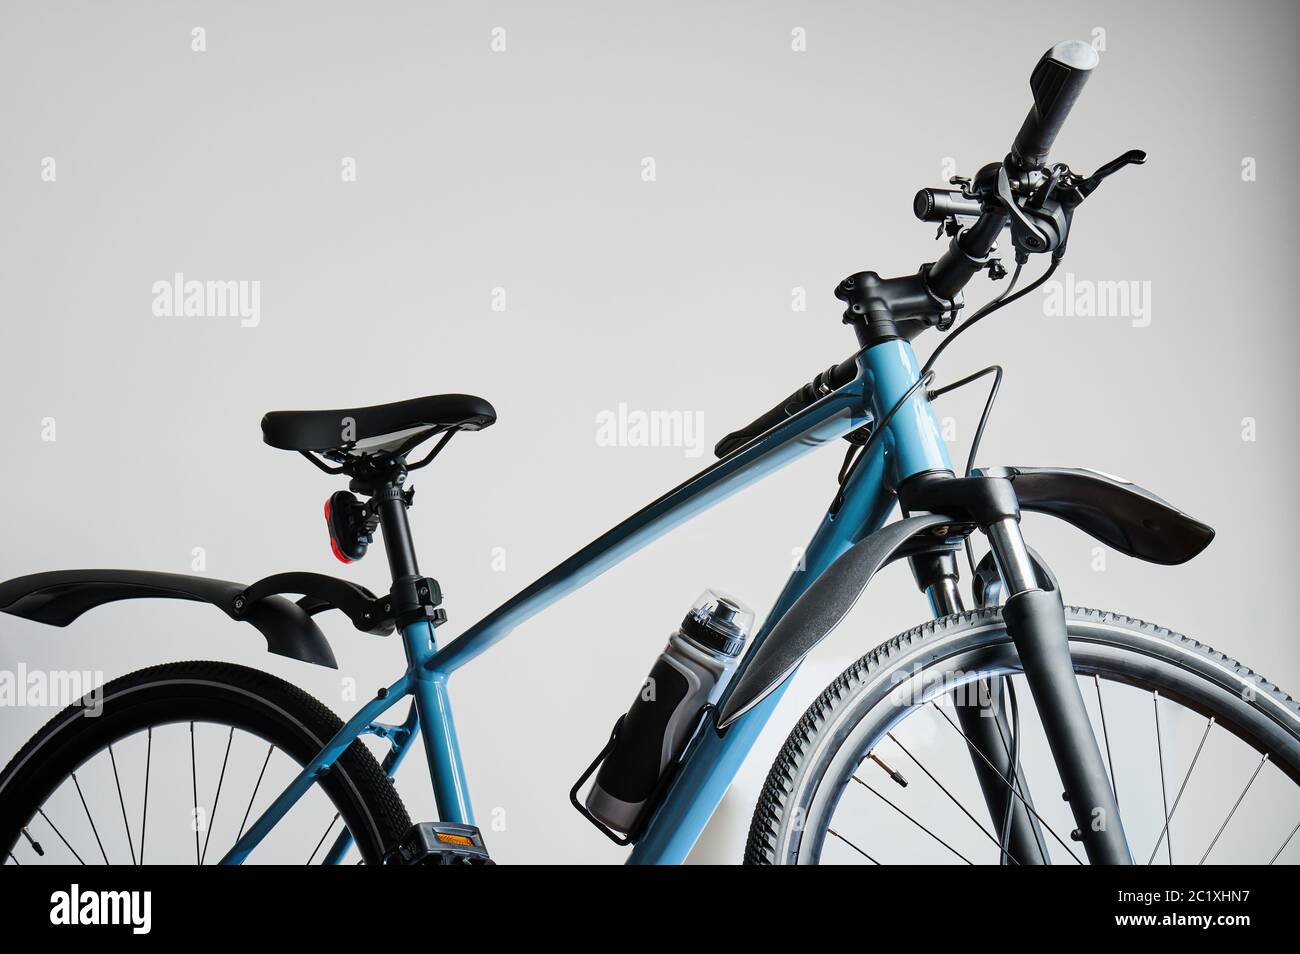 https://c8.alamy.com/compes/2c1xhn7/nueva-bicicleta-azul-aislada-vista-superior-estilo-de-vida-helthy-tema-2c1xhn7.jpg